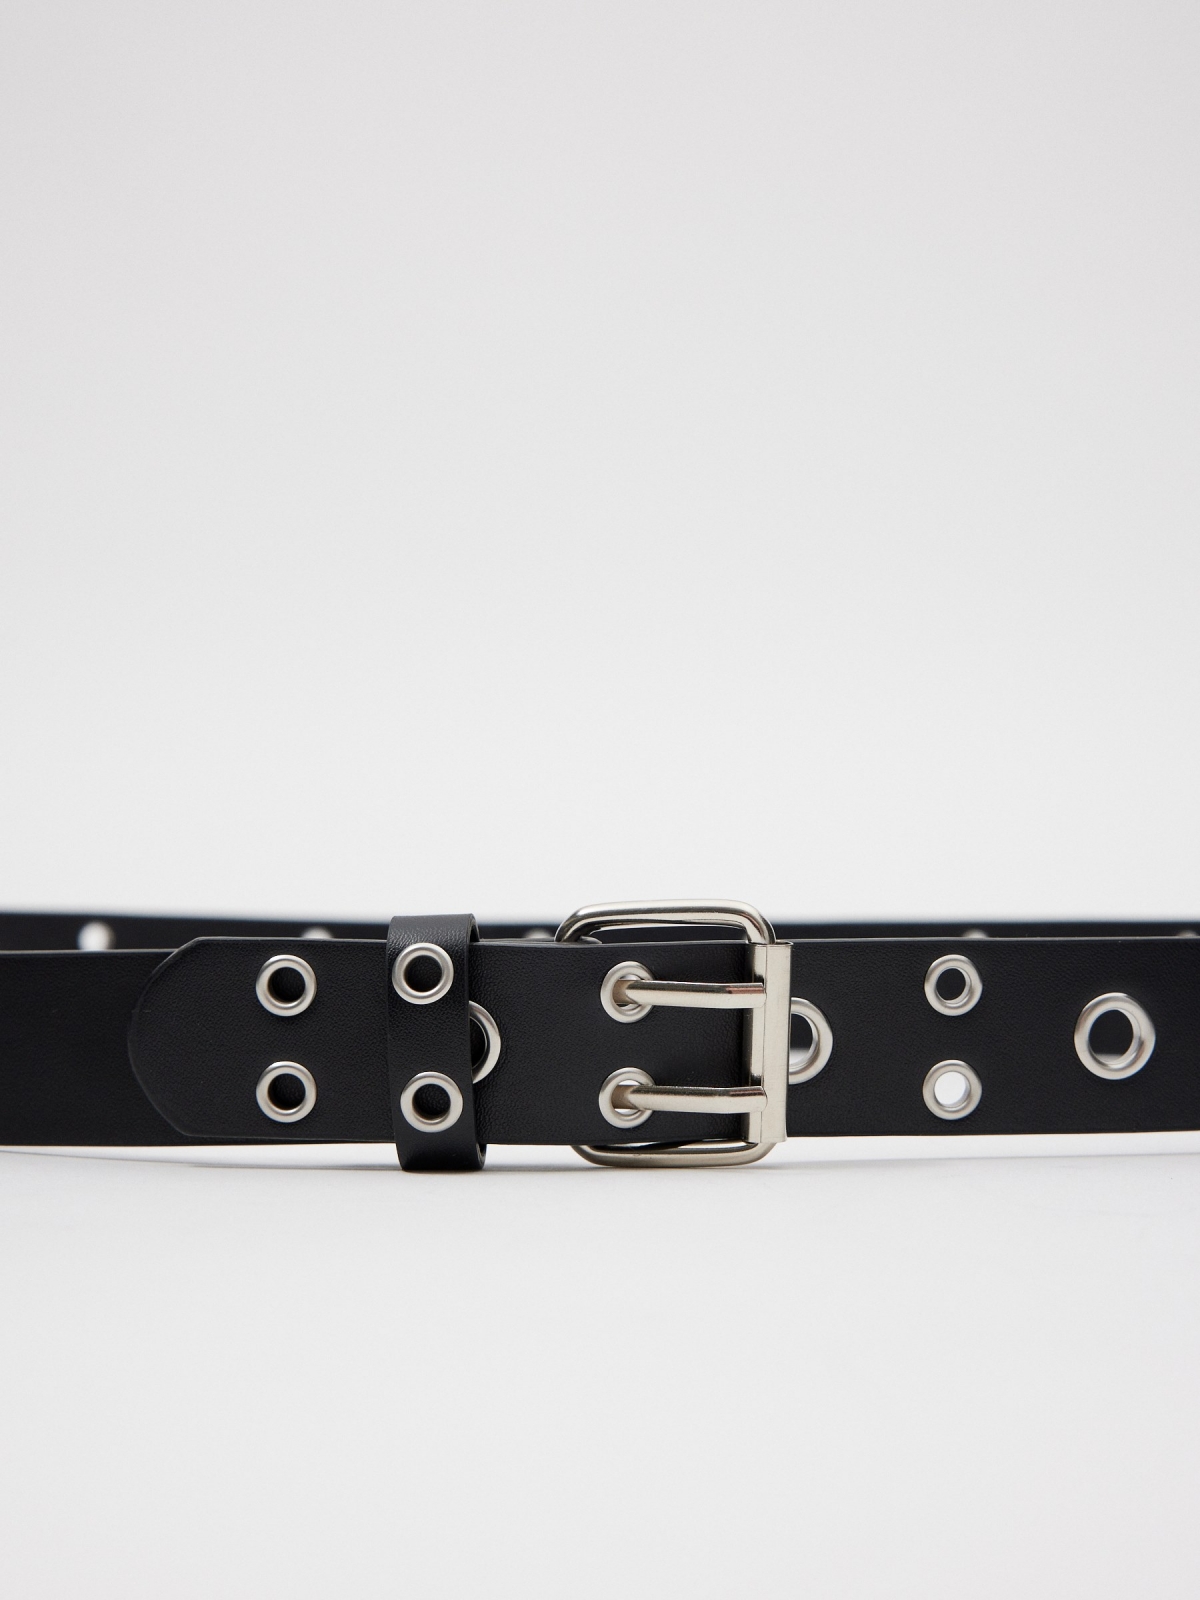 Studded and grommet belt black detail view